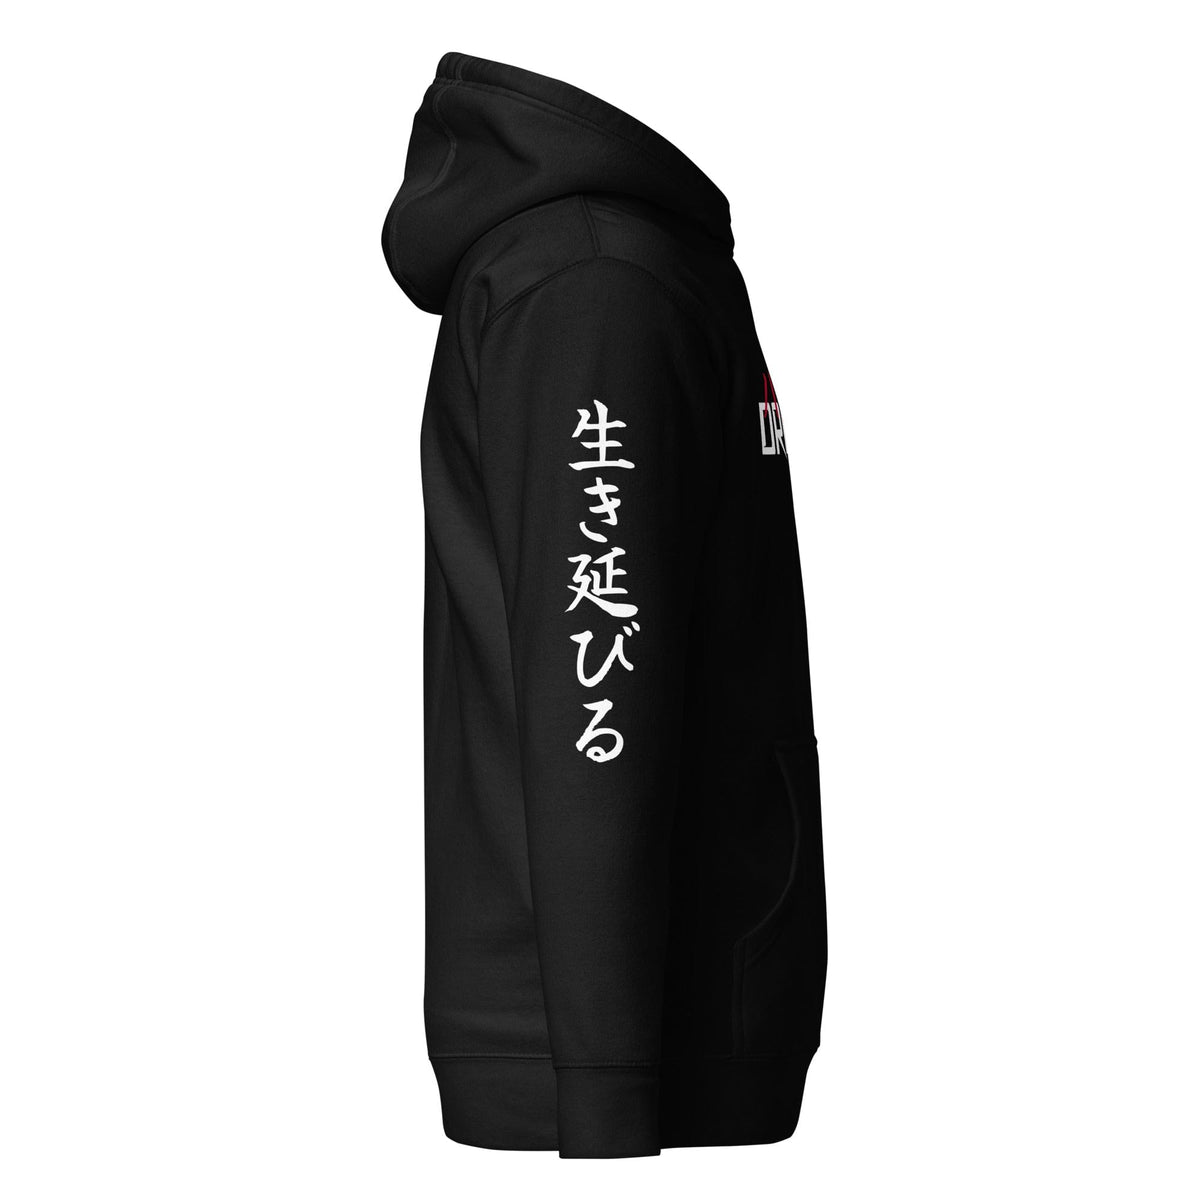 Ichiban Gumball Premium Hoodie Black Japanese clothing